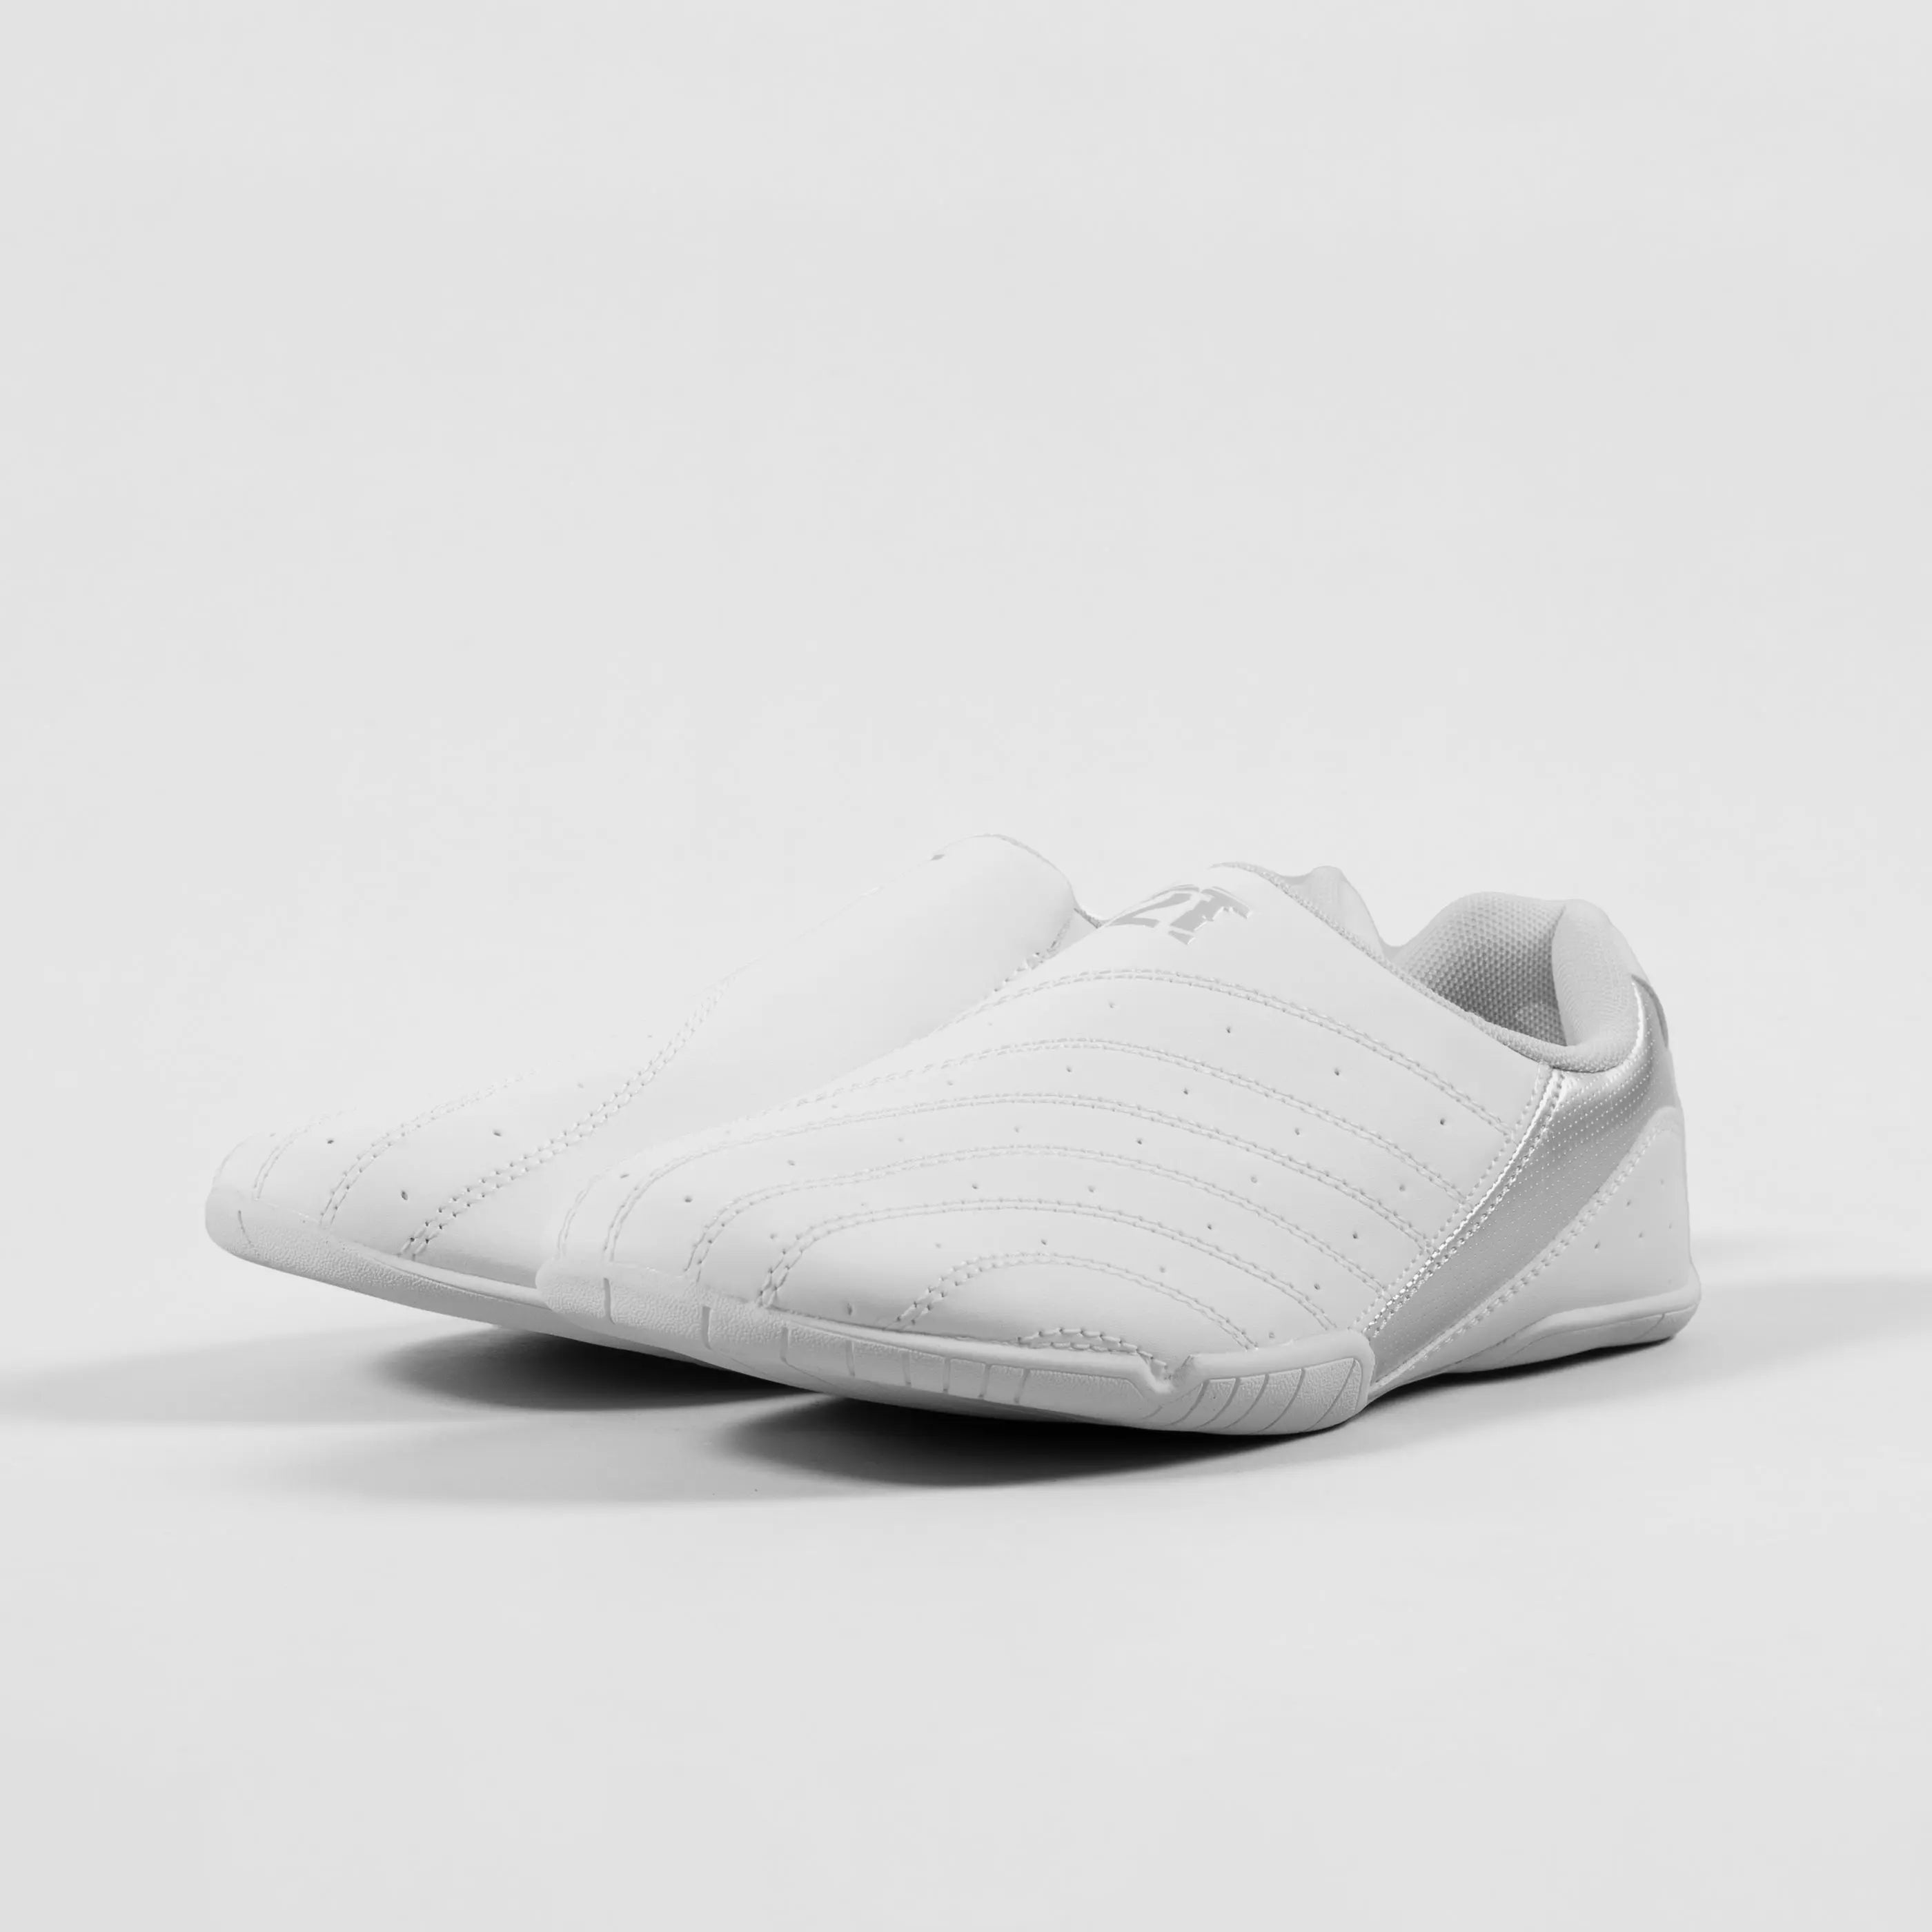 'Flash' Taekwondo Training Shoes - White/Silver 2TUF2TAP